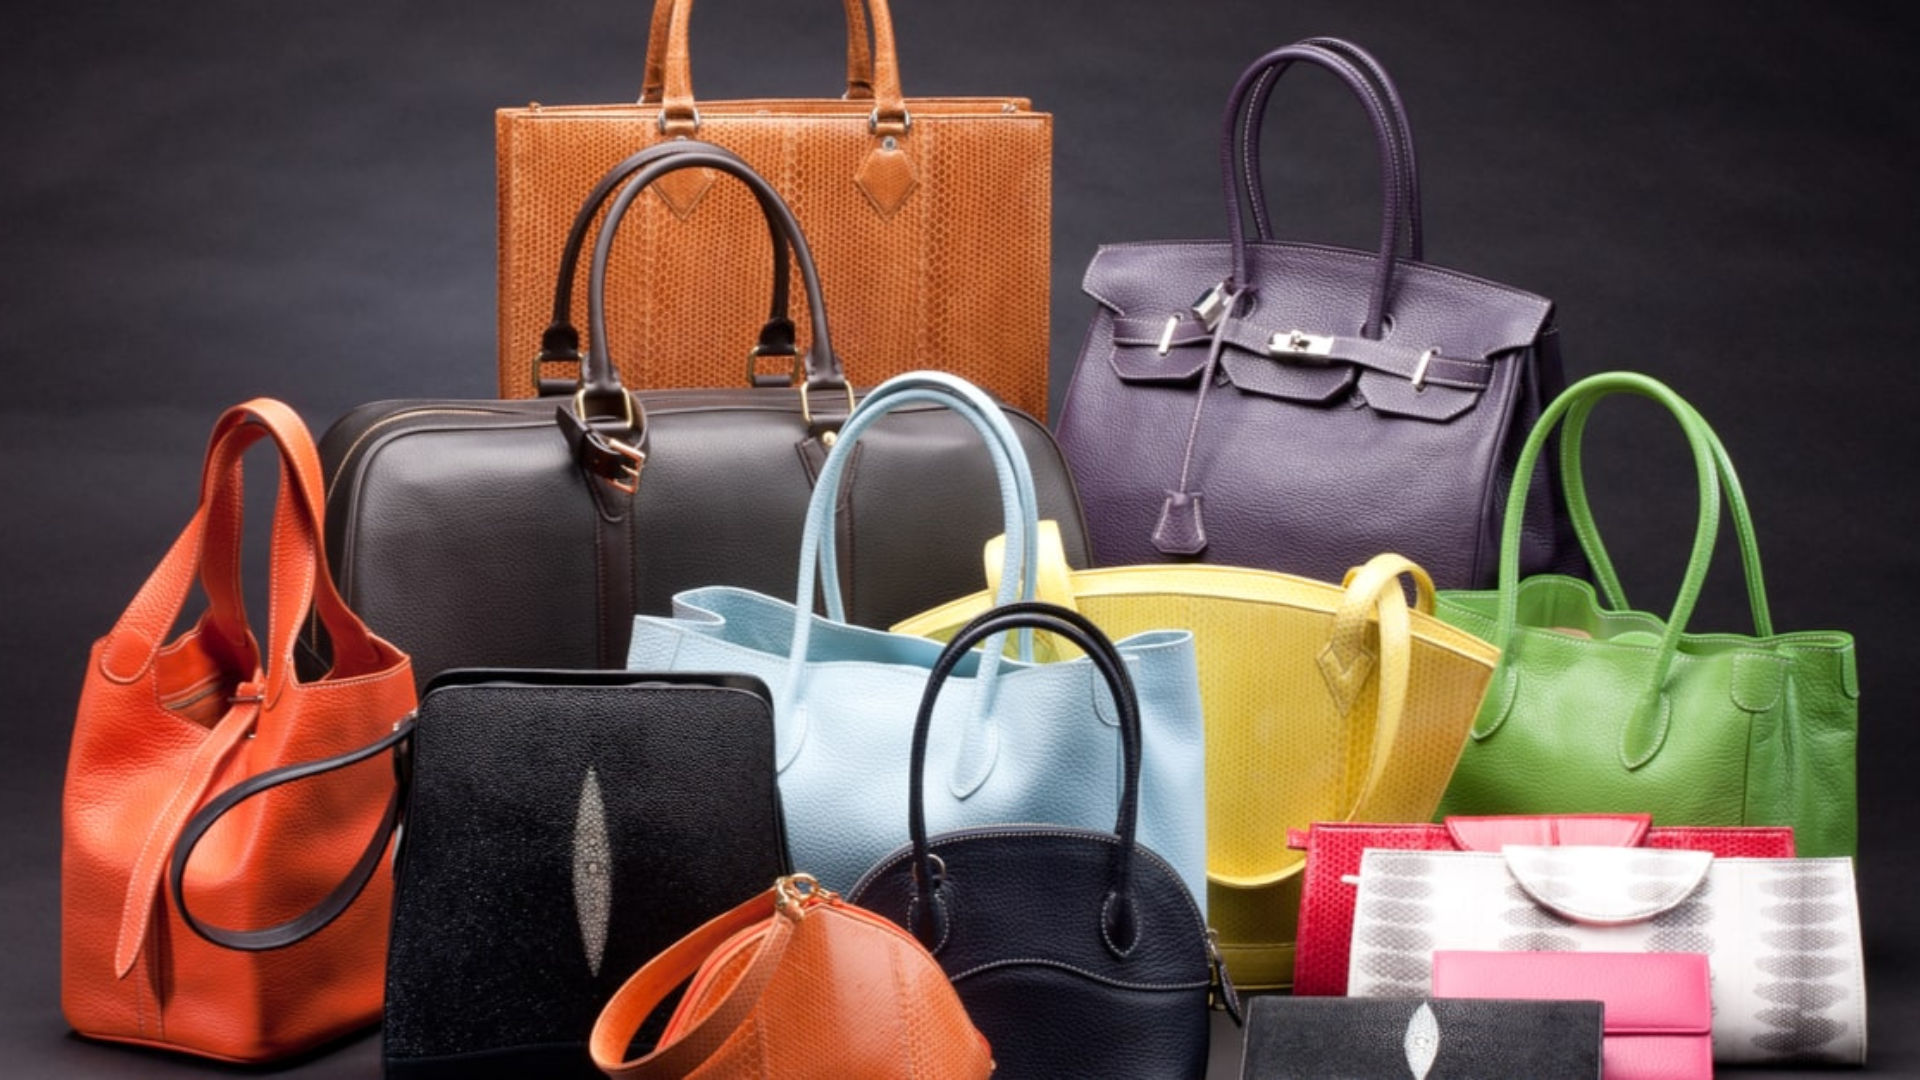 leather handbags under $100